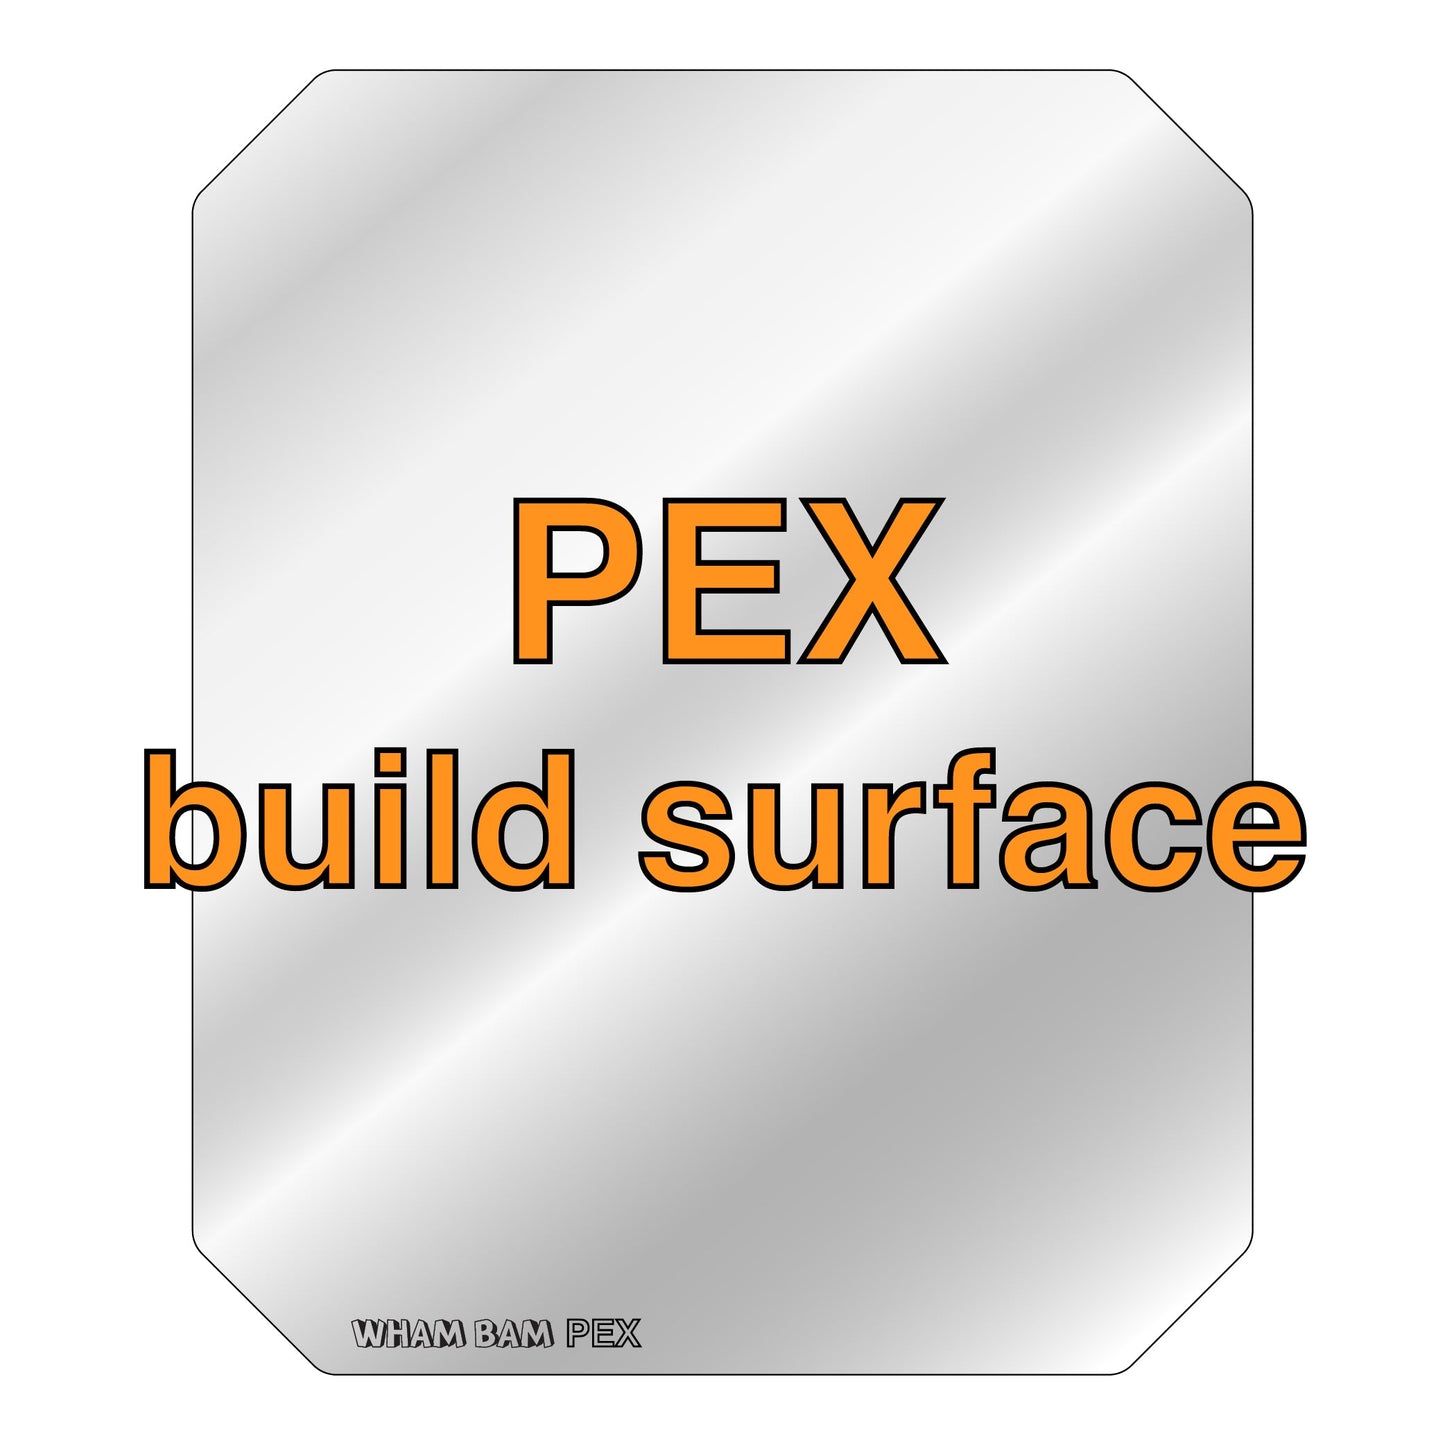 PEX Build Surface - 254 x 203 - MakerGear M2 & M3, CraftBot Plus Pro